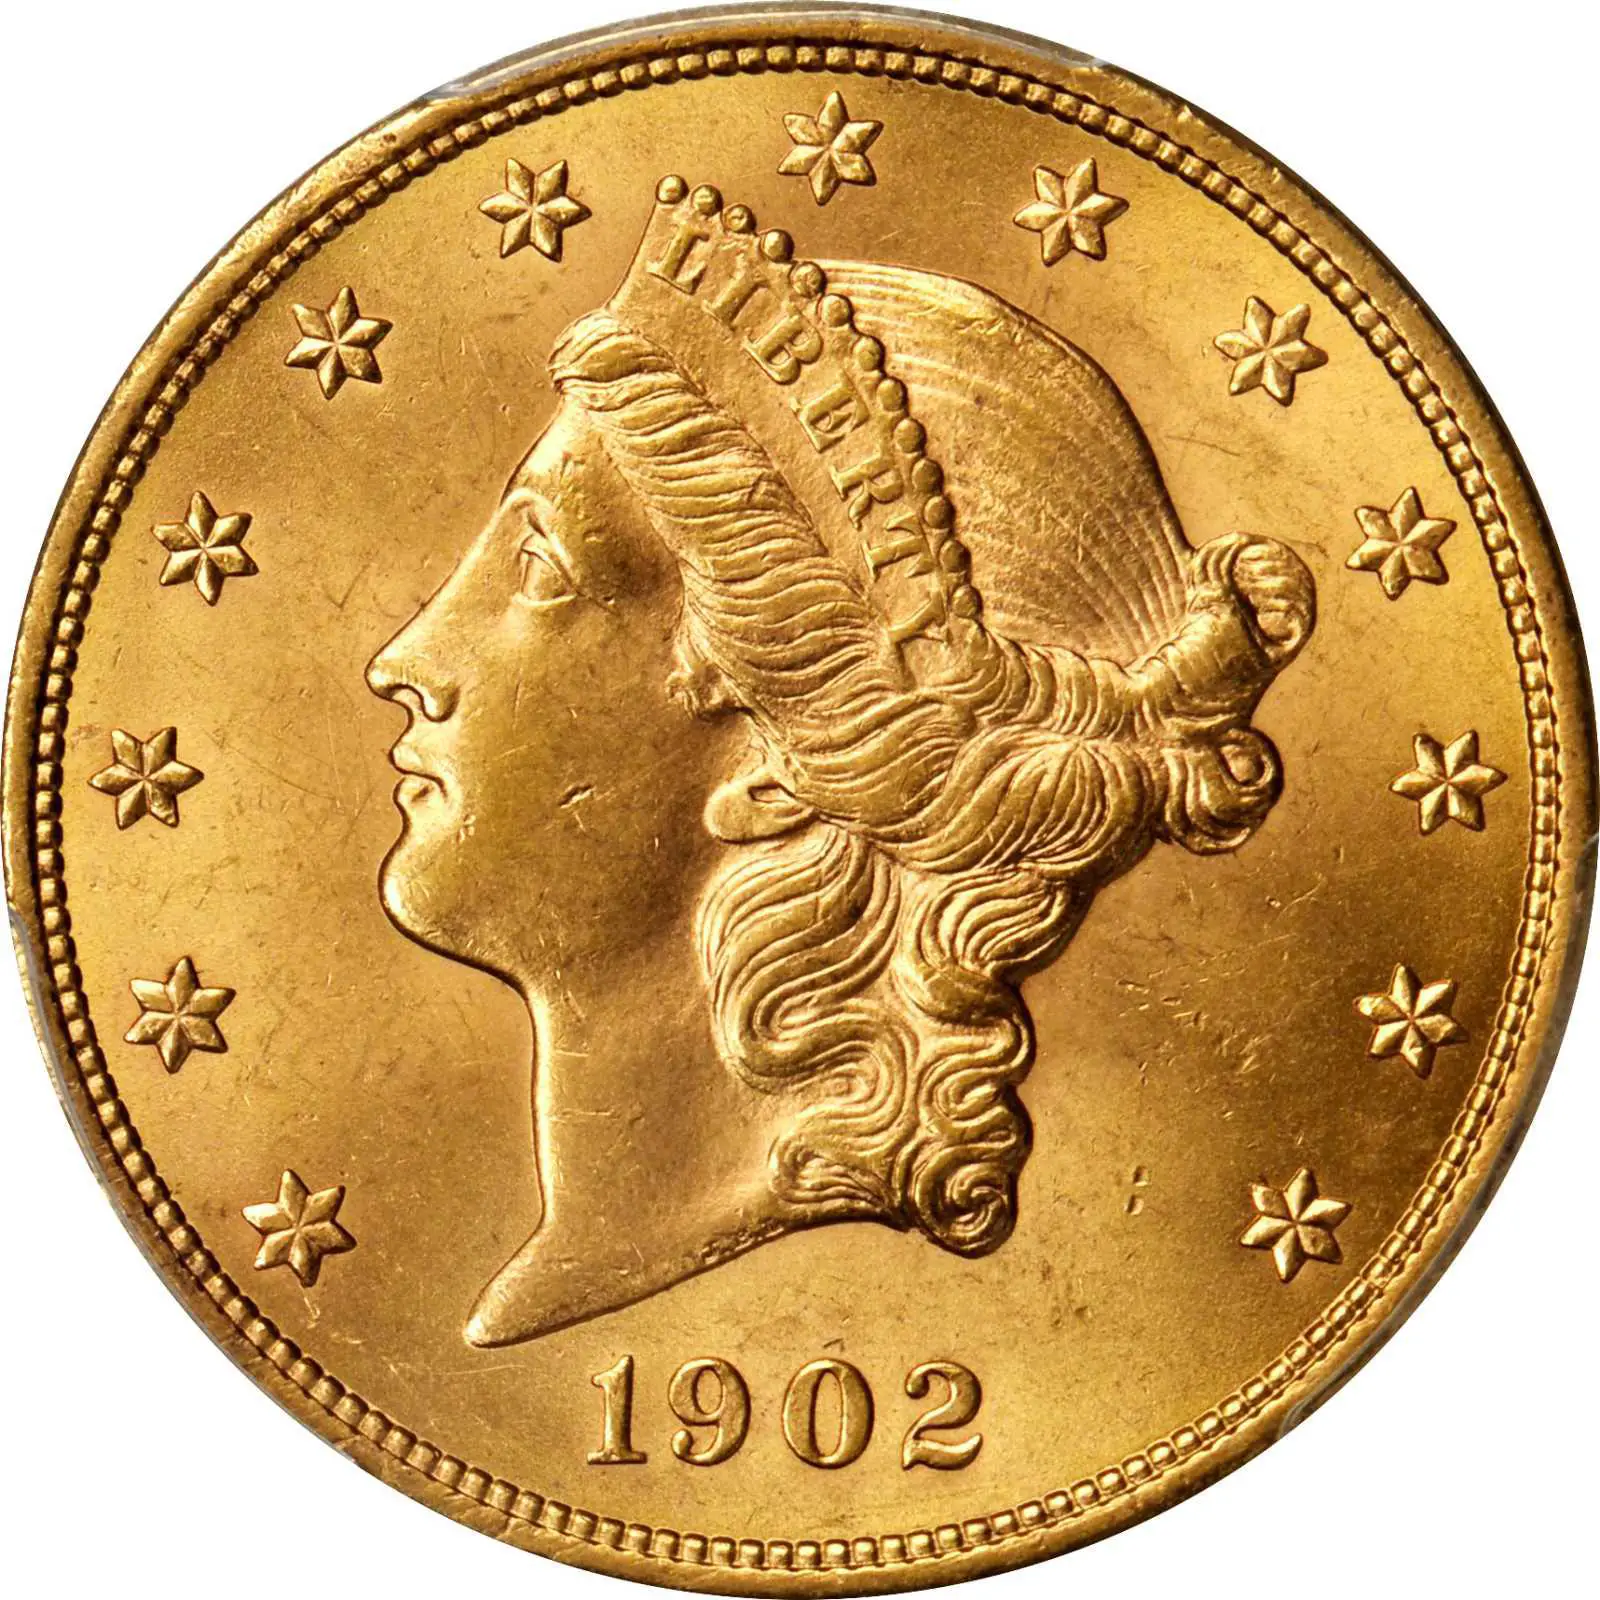 Value of 1902 $20 Liberty Double Eagle